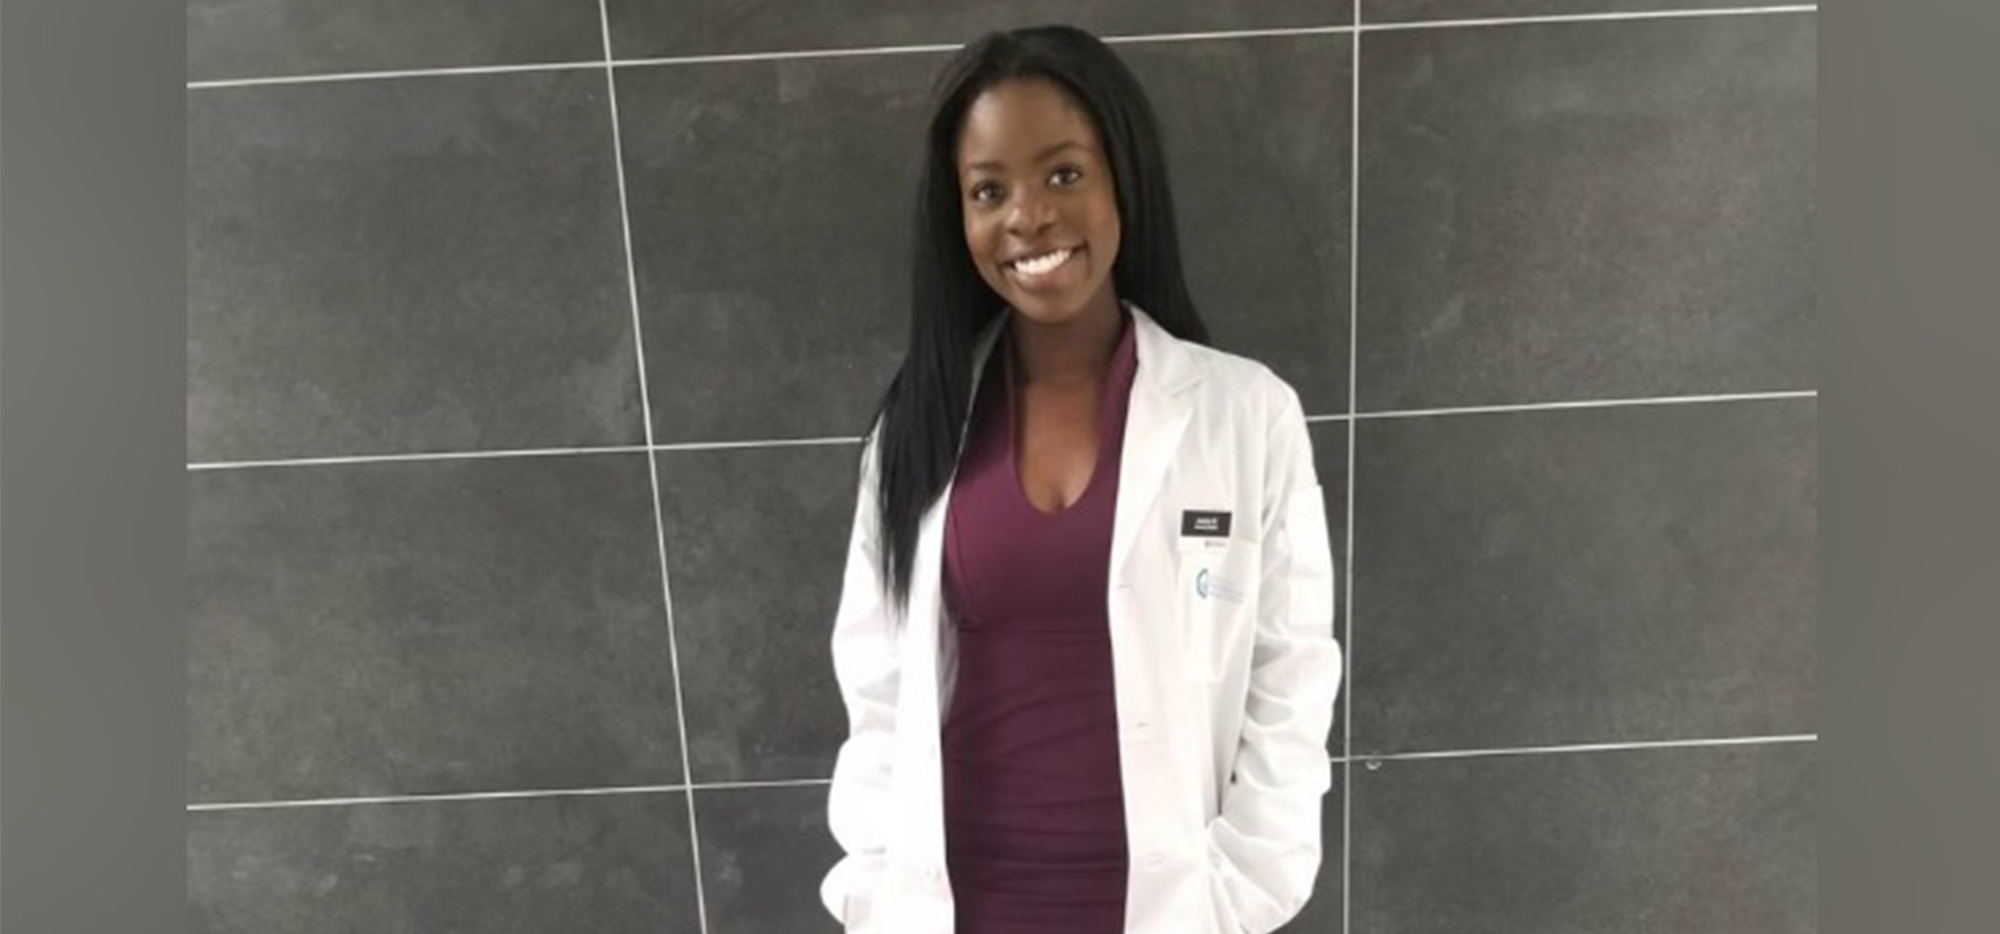 Jocelyn Bonti-Ankomah smiling and wearing a lab coat